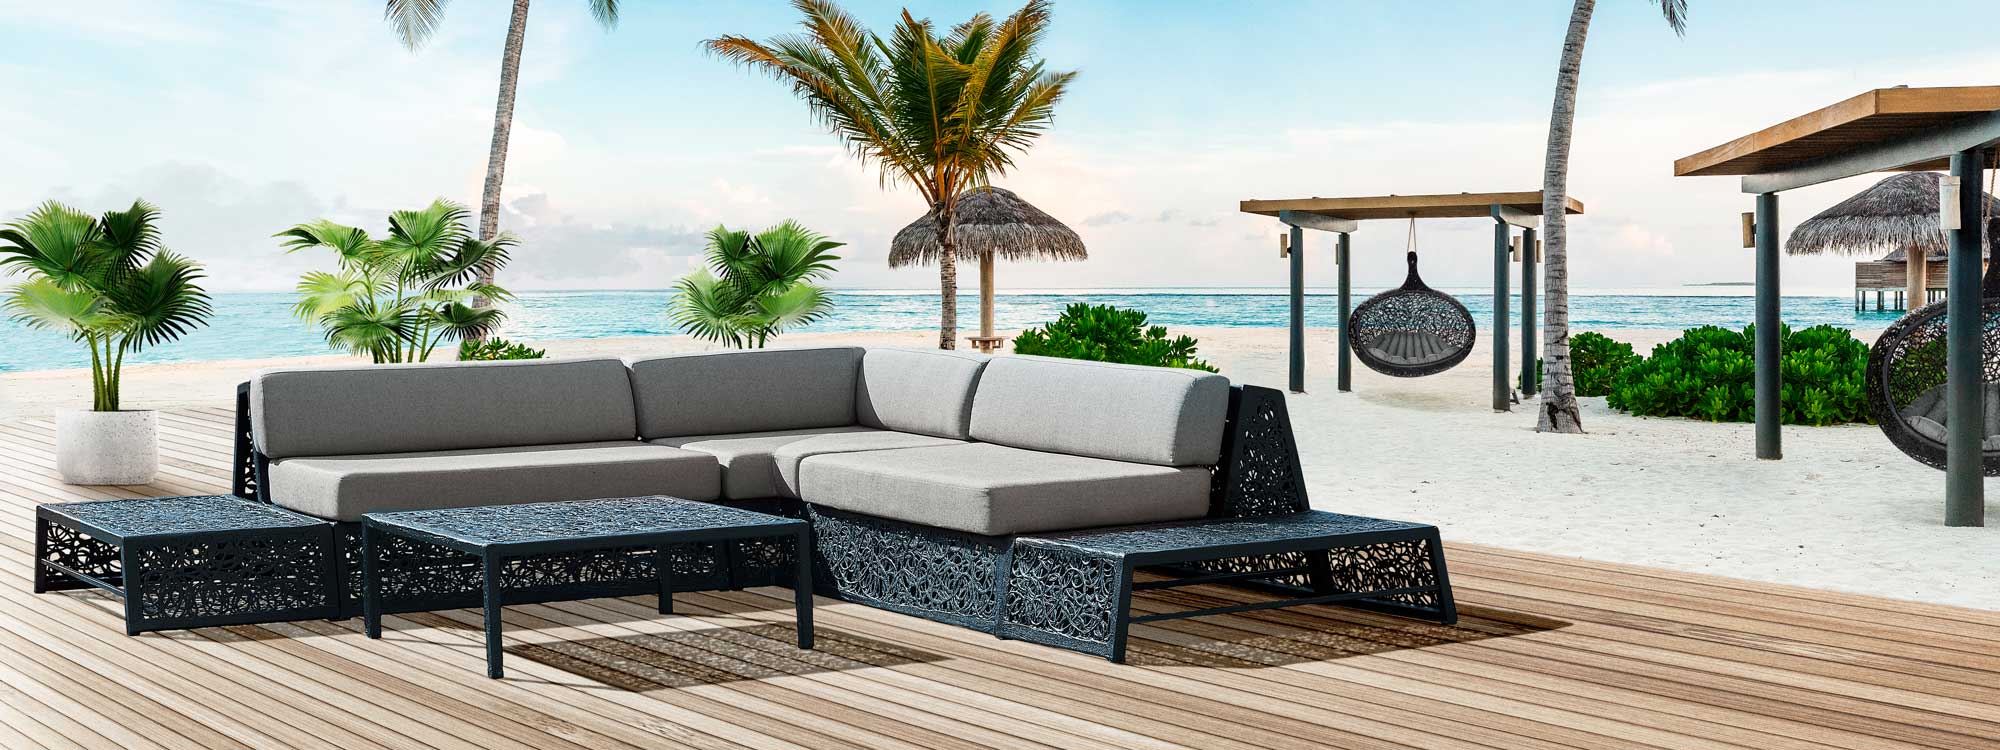 Bios Lounge garden sofa is a modular outdoor sofa in high quality outdoor furniture materials by Black modern garden furniture company.